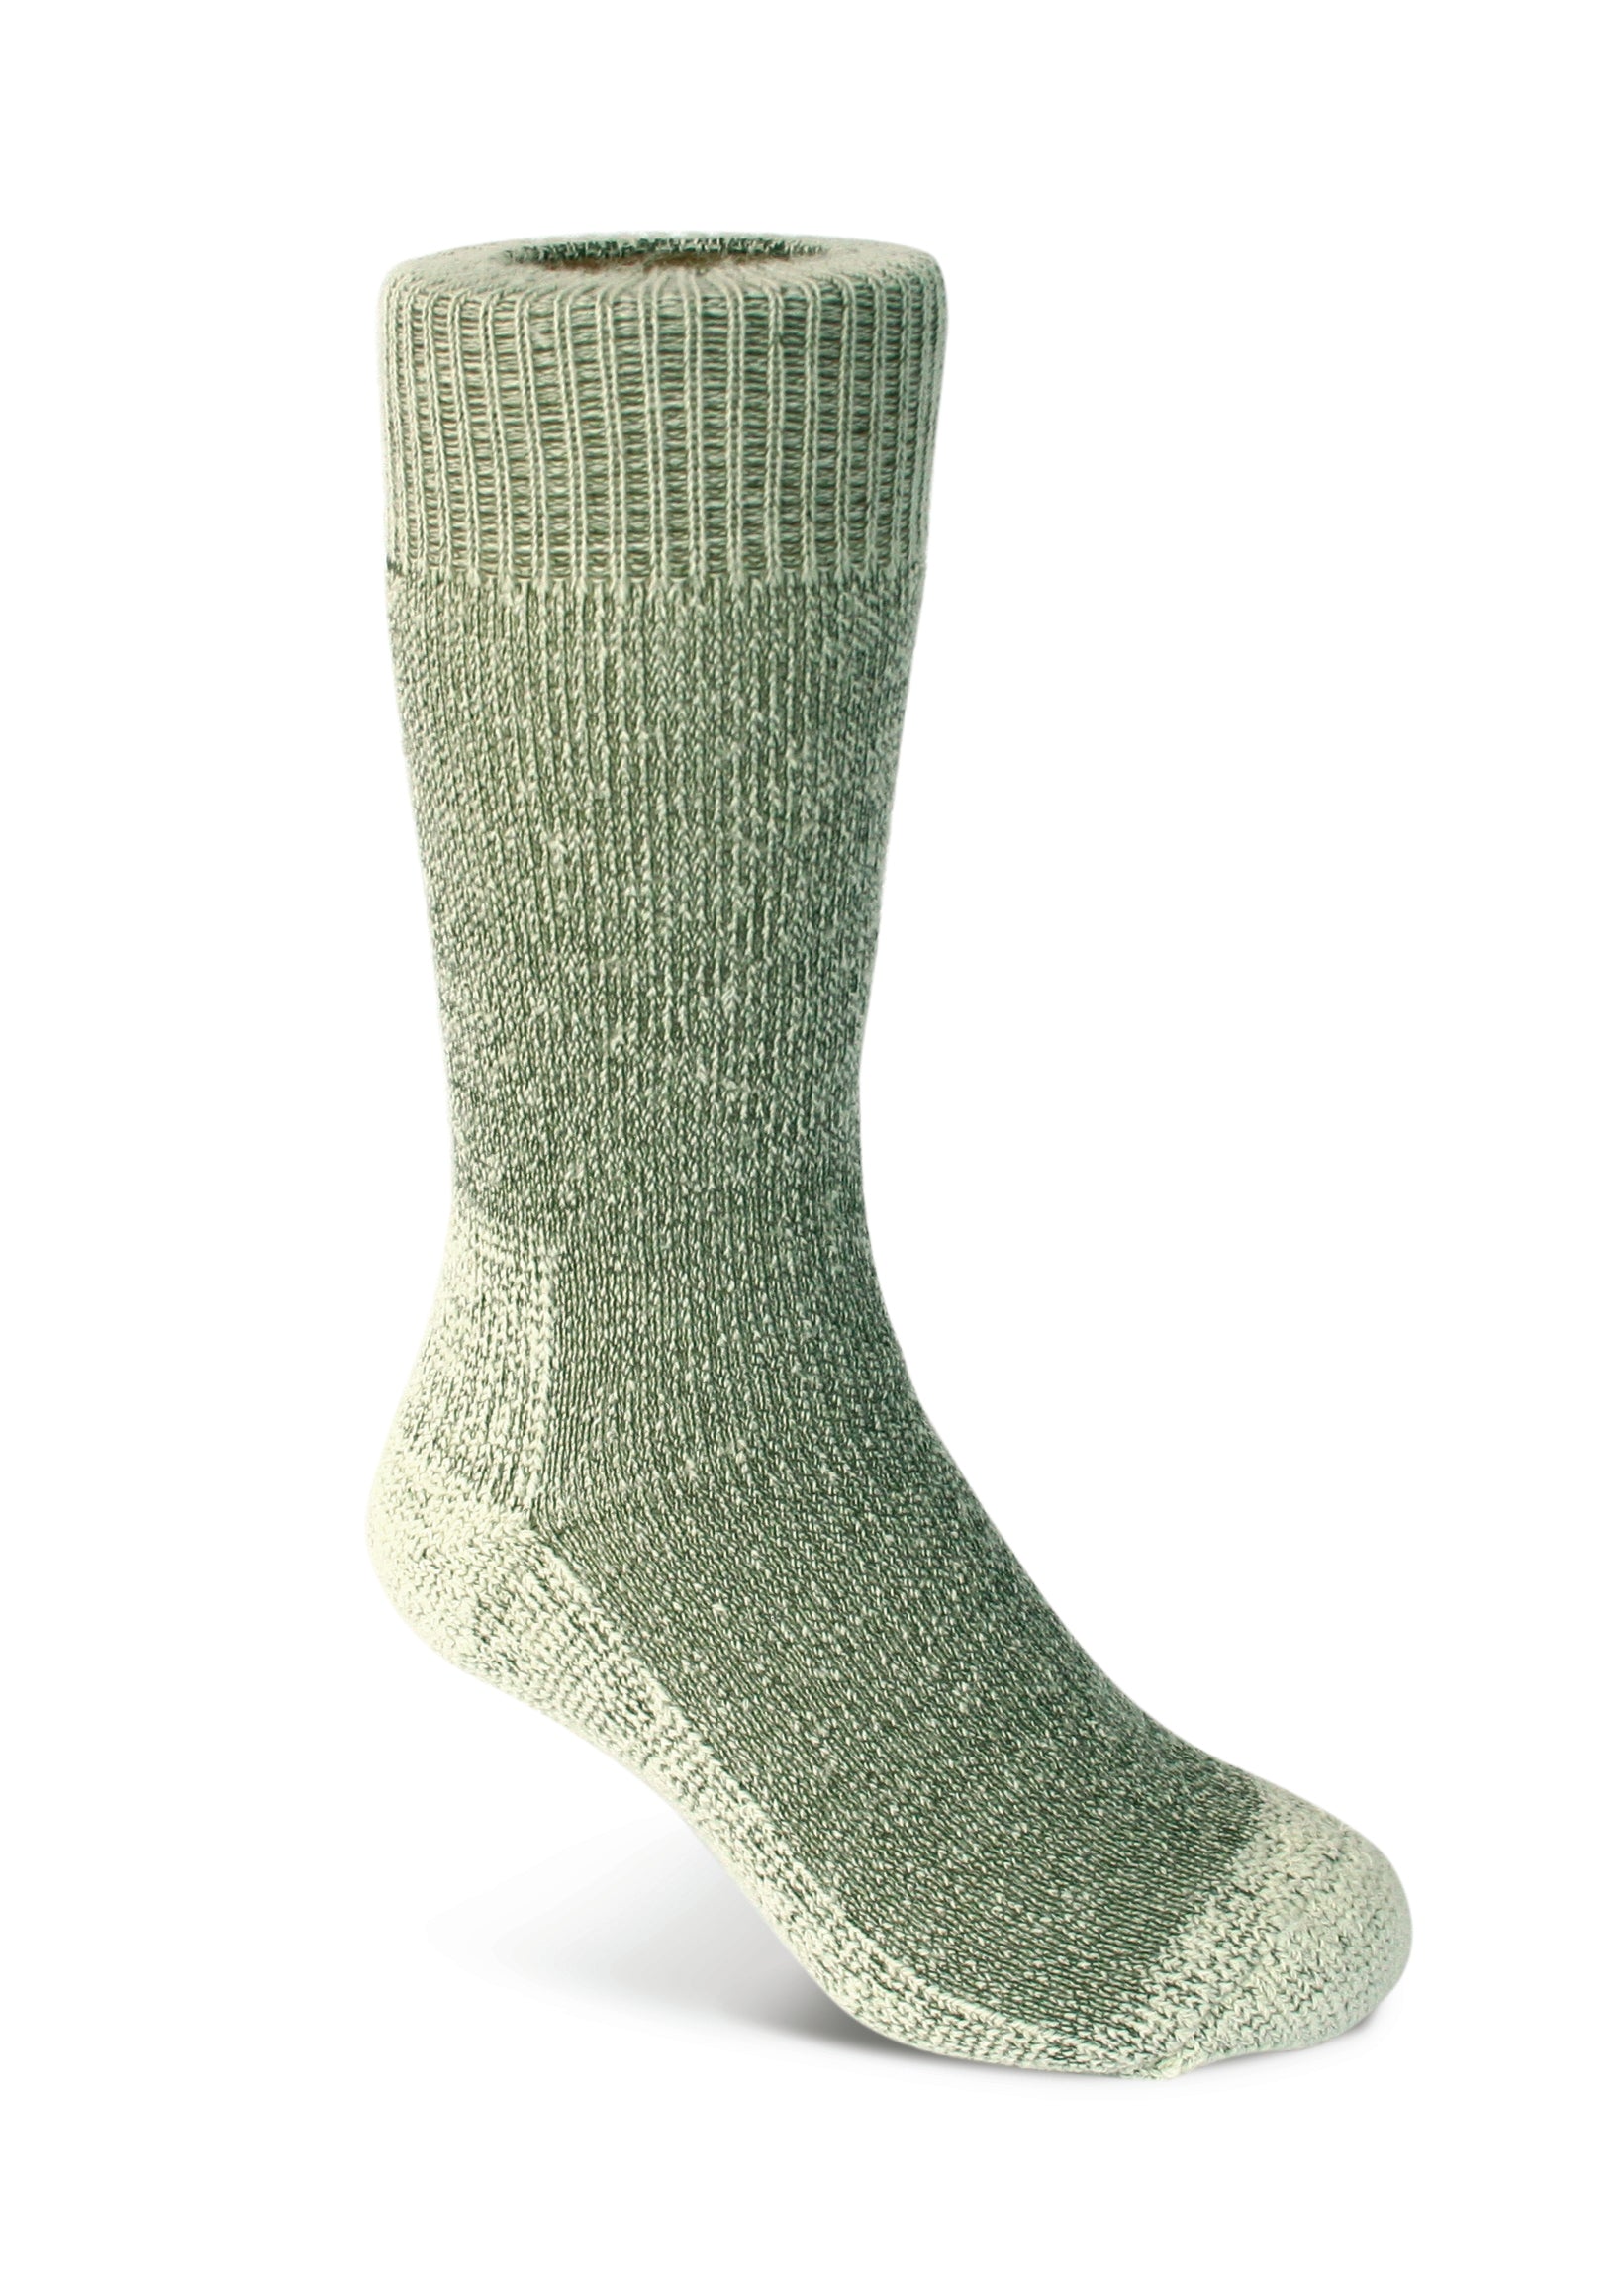 Merino Wool Unisex 3 Pack Ranger Boot Socks - Norsewear NZ